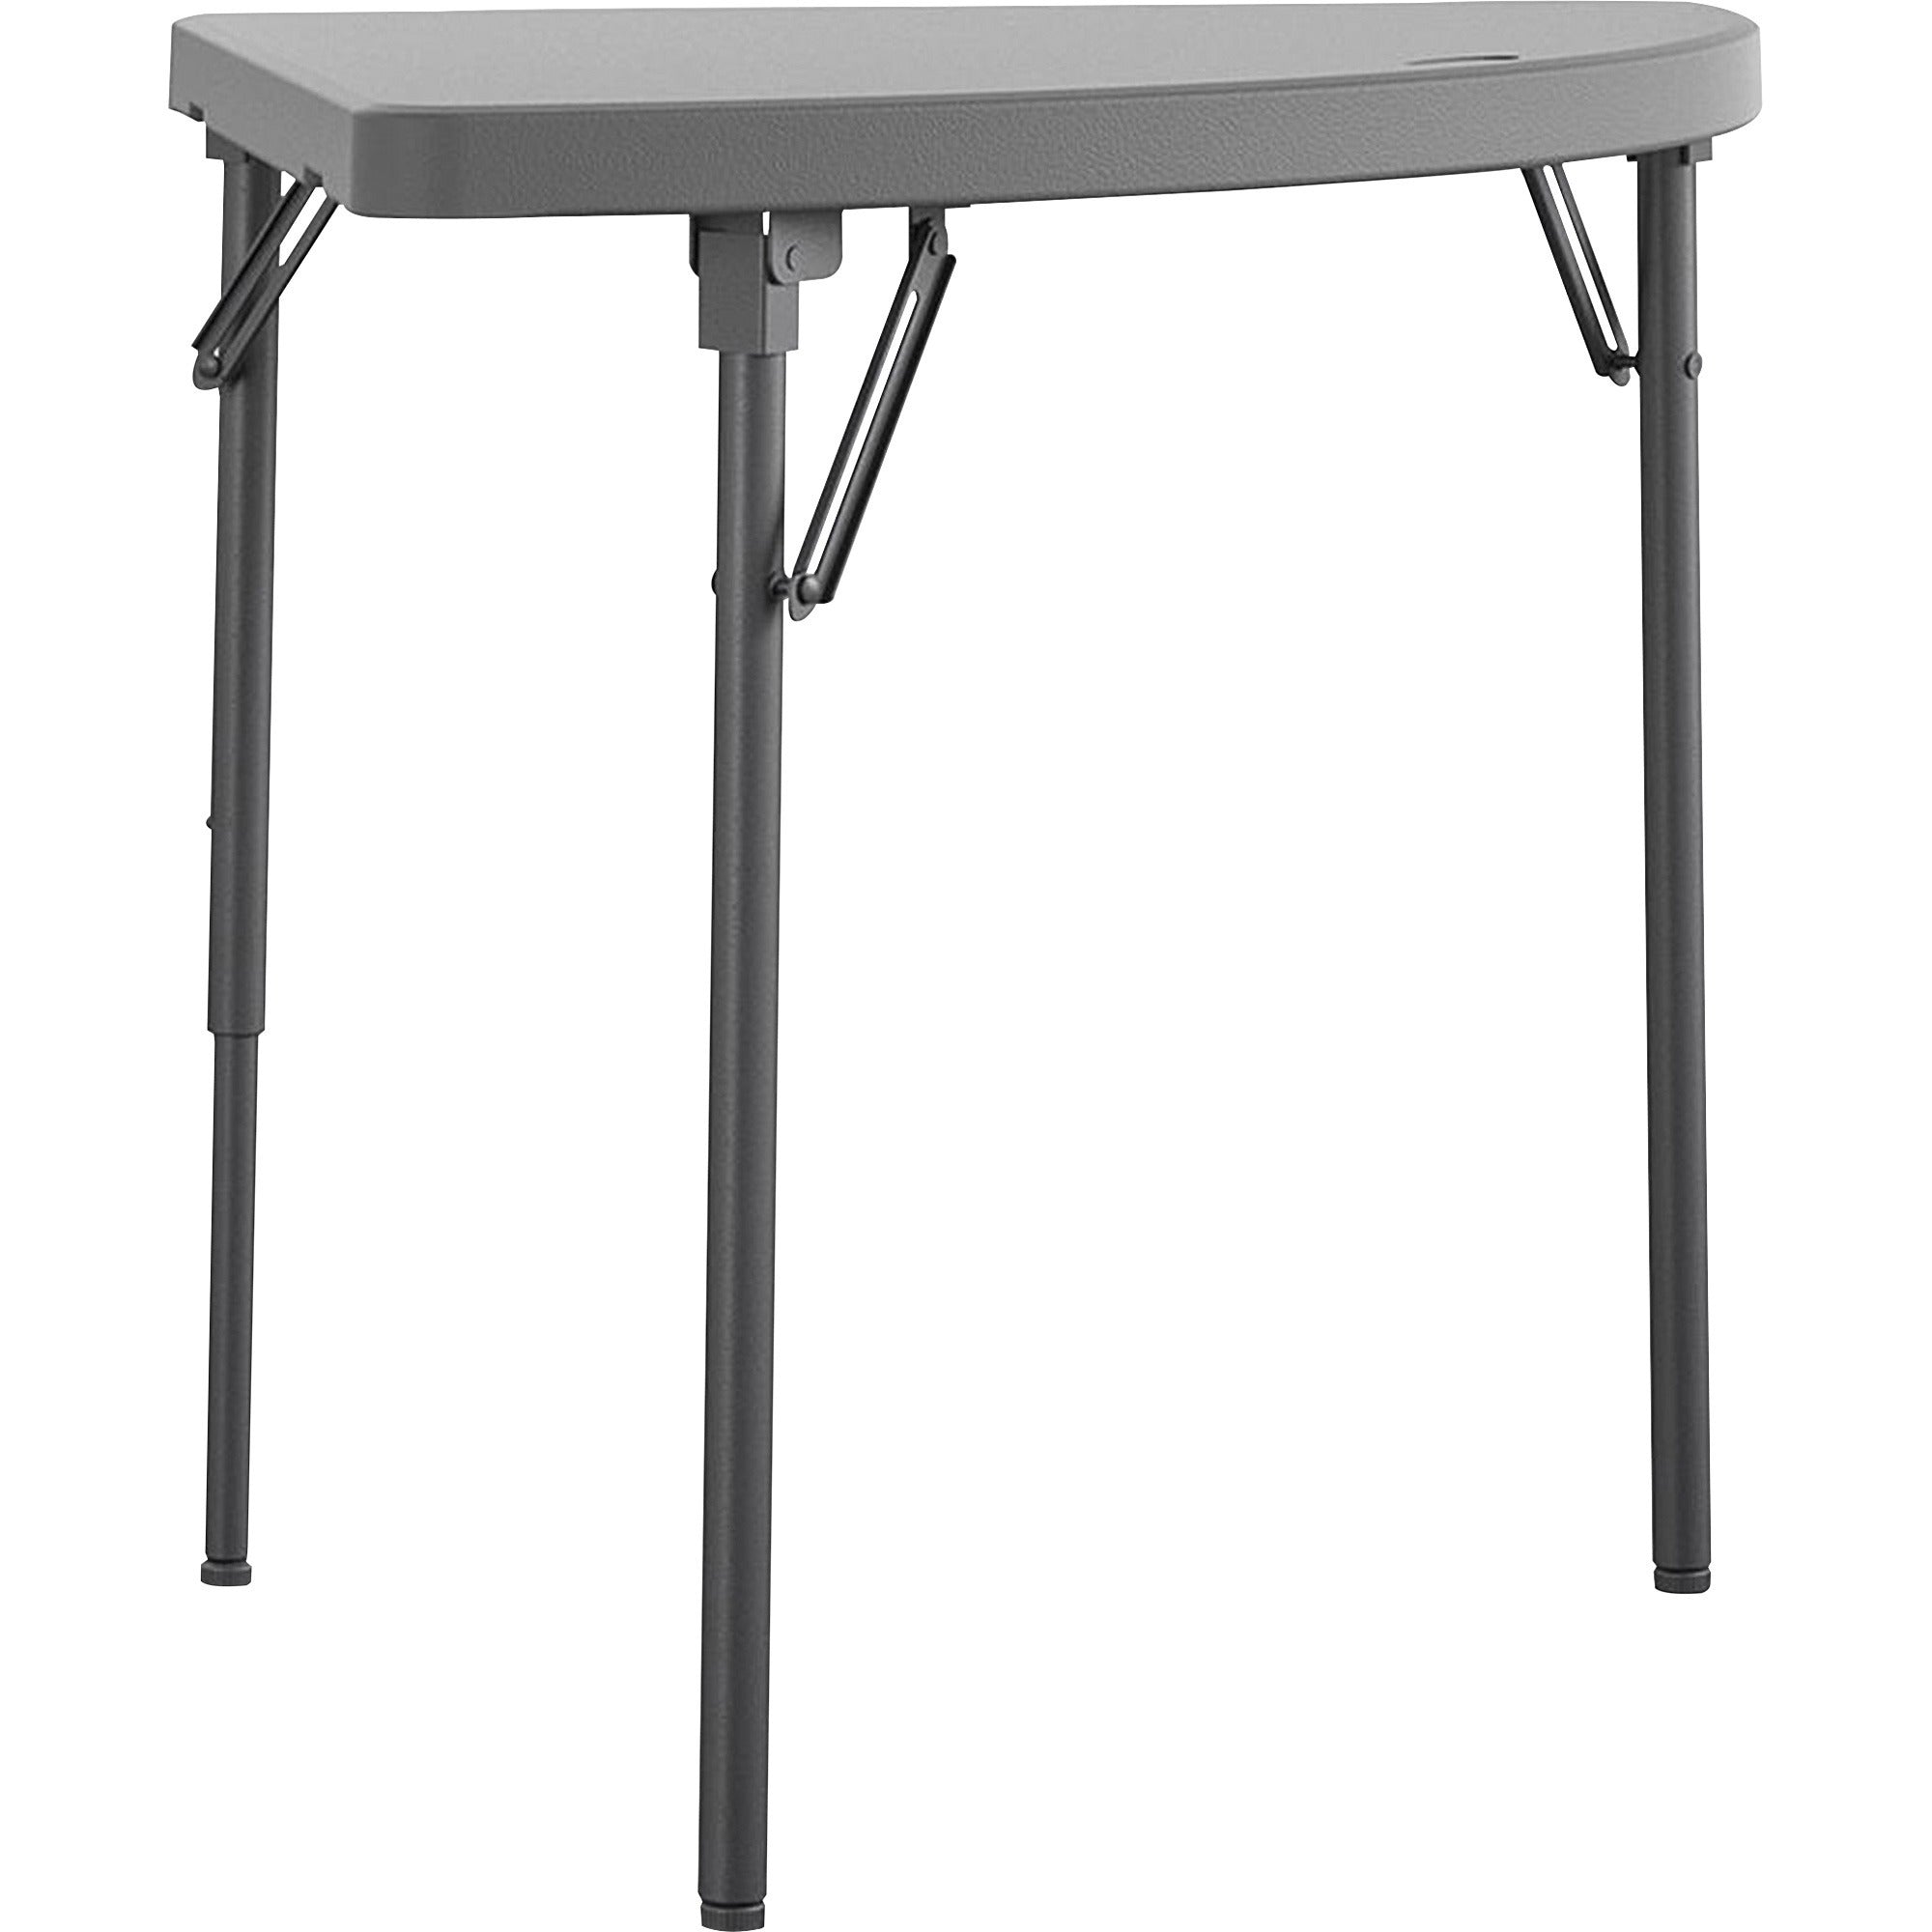 Dorel Zown Classic 24" Corner Blow Mold Fold Table - For - Table TopHalf Moon Top - 3 Legs - 200 lb Capacity x 29.50" Table Top Width x 29.20" Table Top Depth - 29.50" Height - Gray - High-density Polyethylene (HDPE), Resin - 2 / Carton - 1